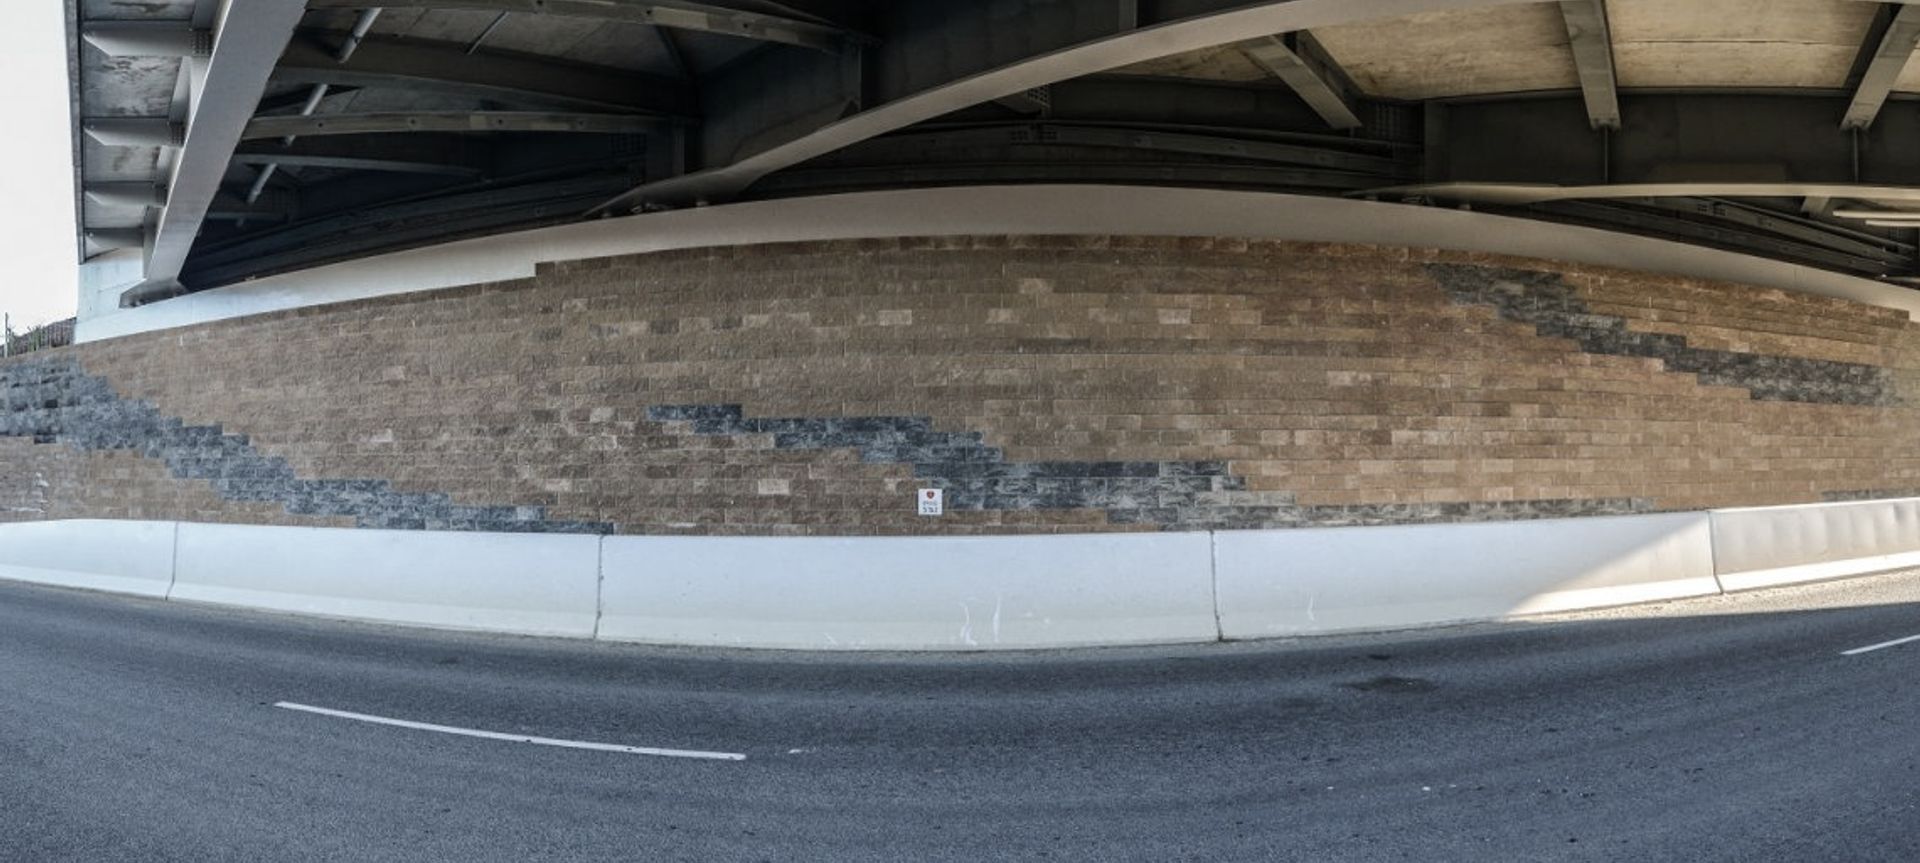 Cambridge Tamahere Expressway - Firth Keysteel® retaining wall system banner